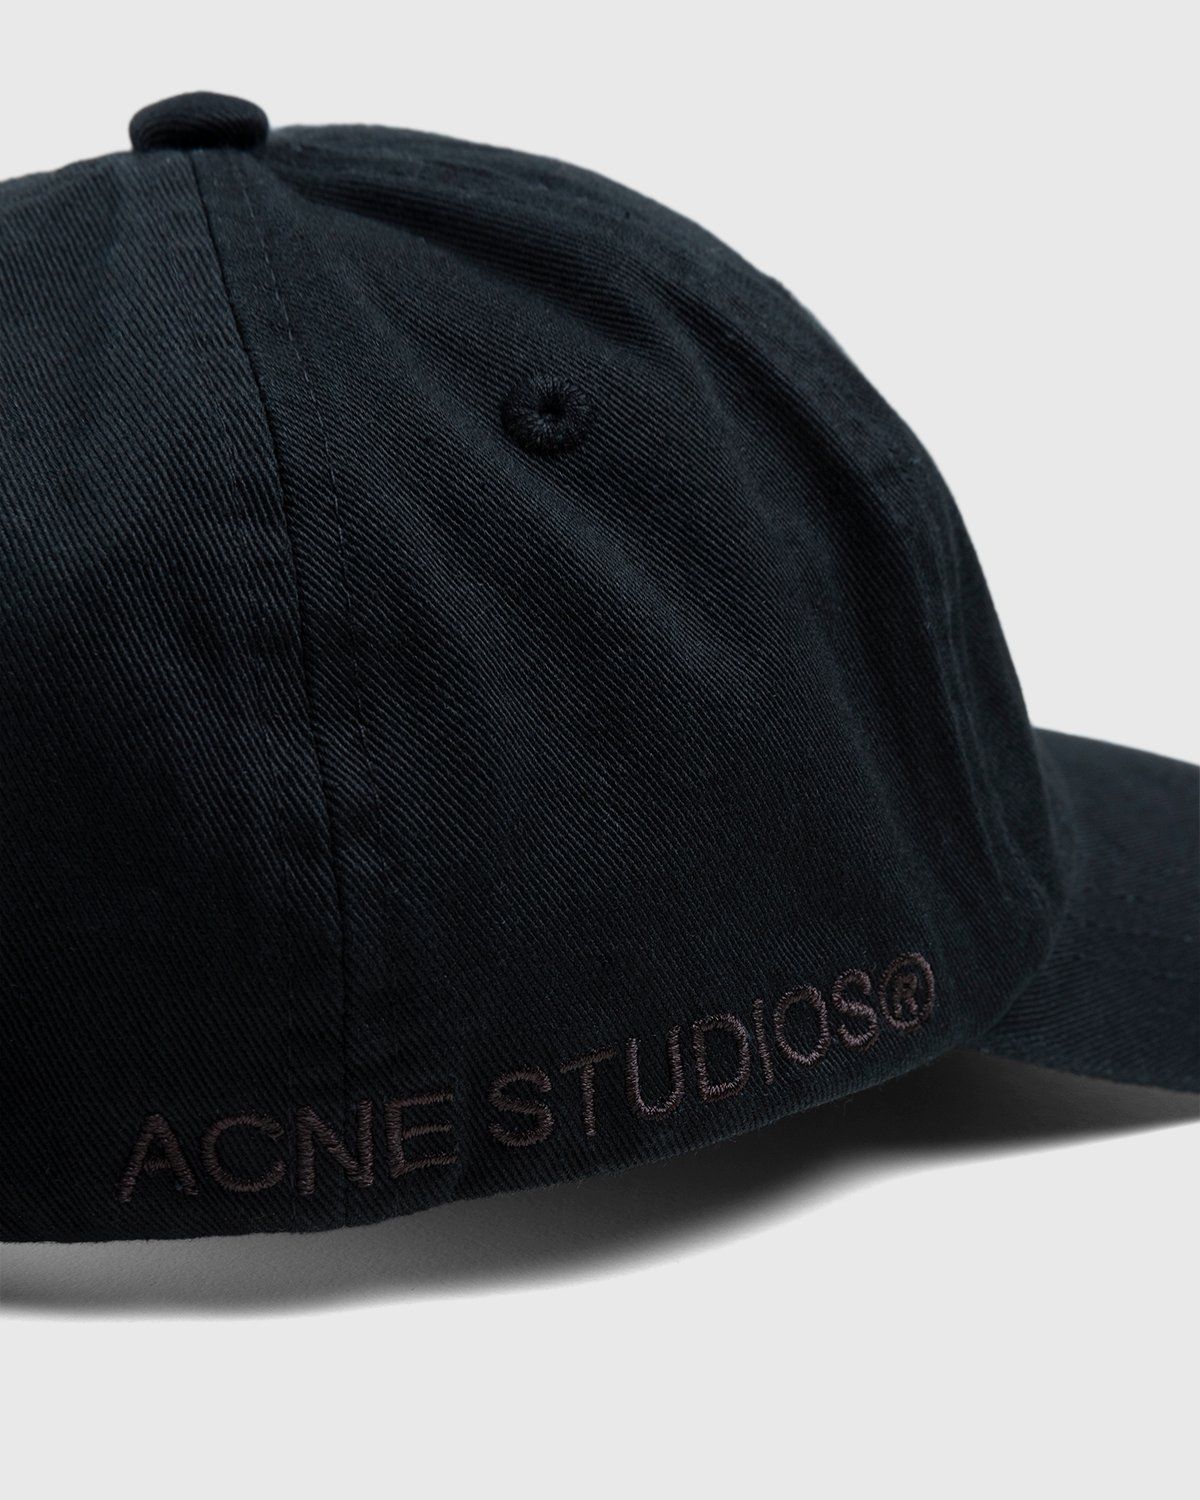 Acne Studios – Cotton Baseball Cap Black - Hats - Black - Image 5